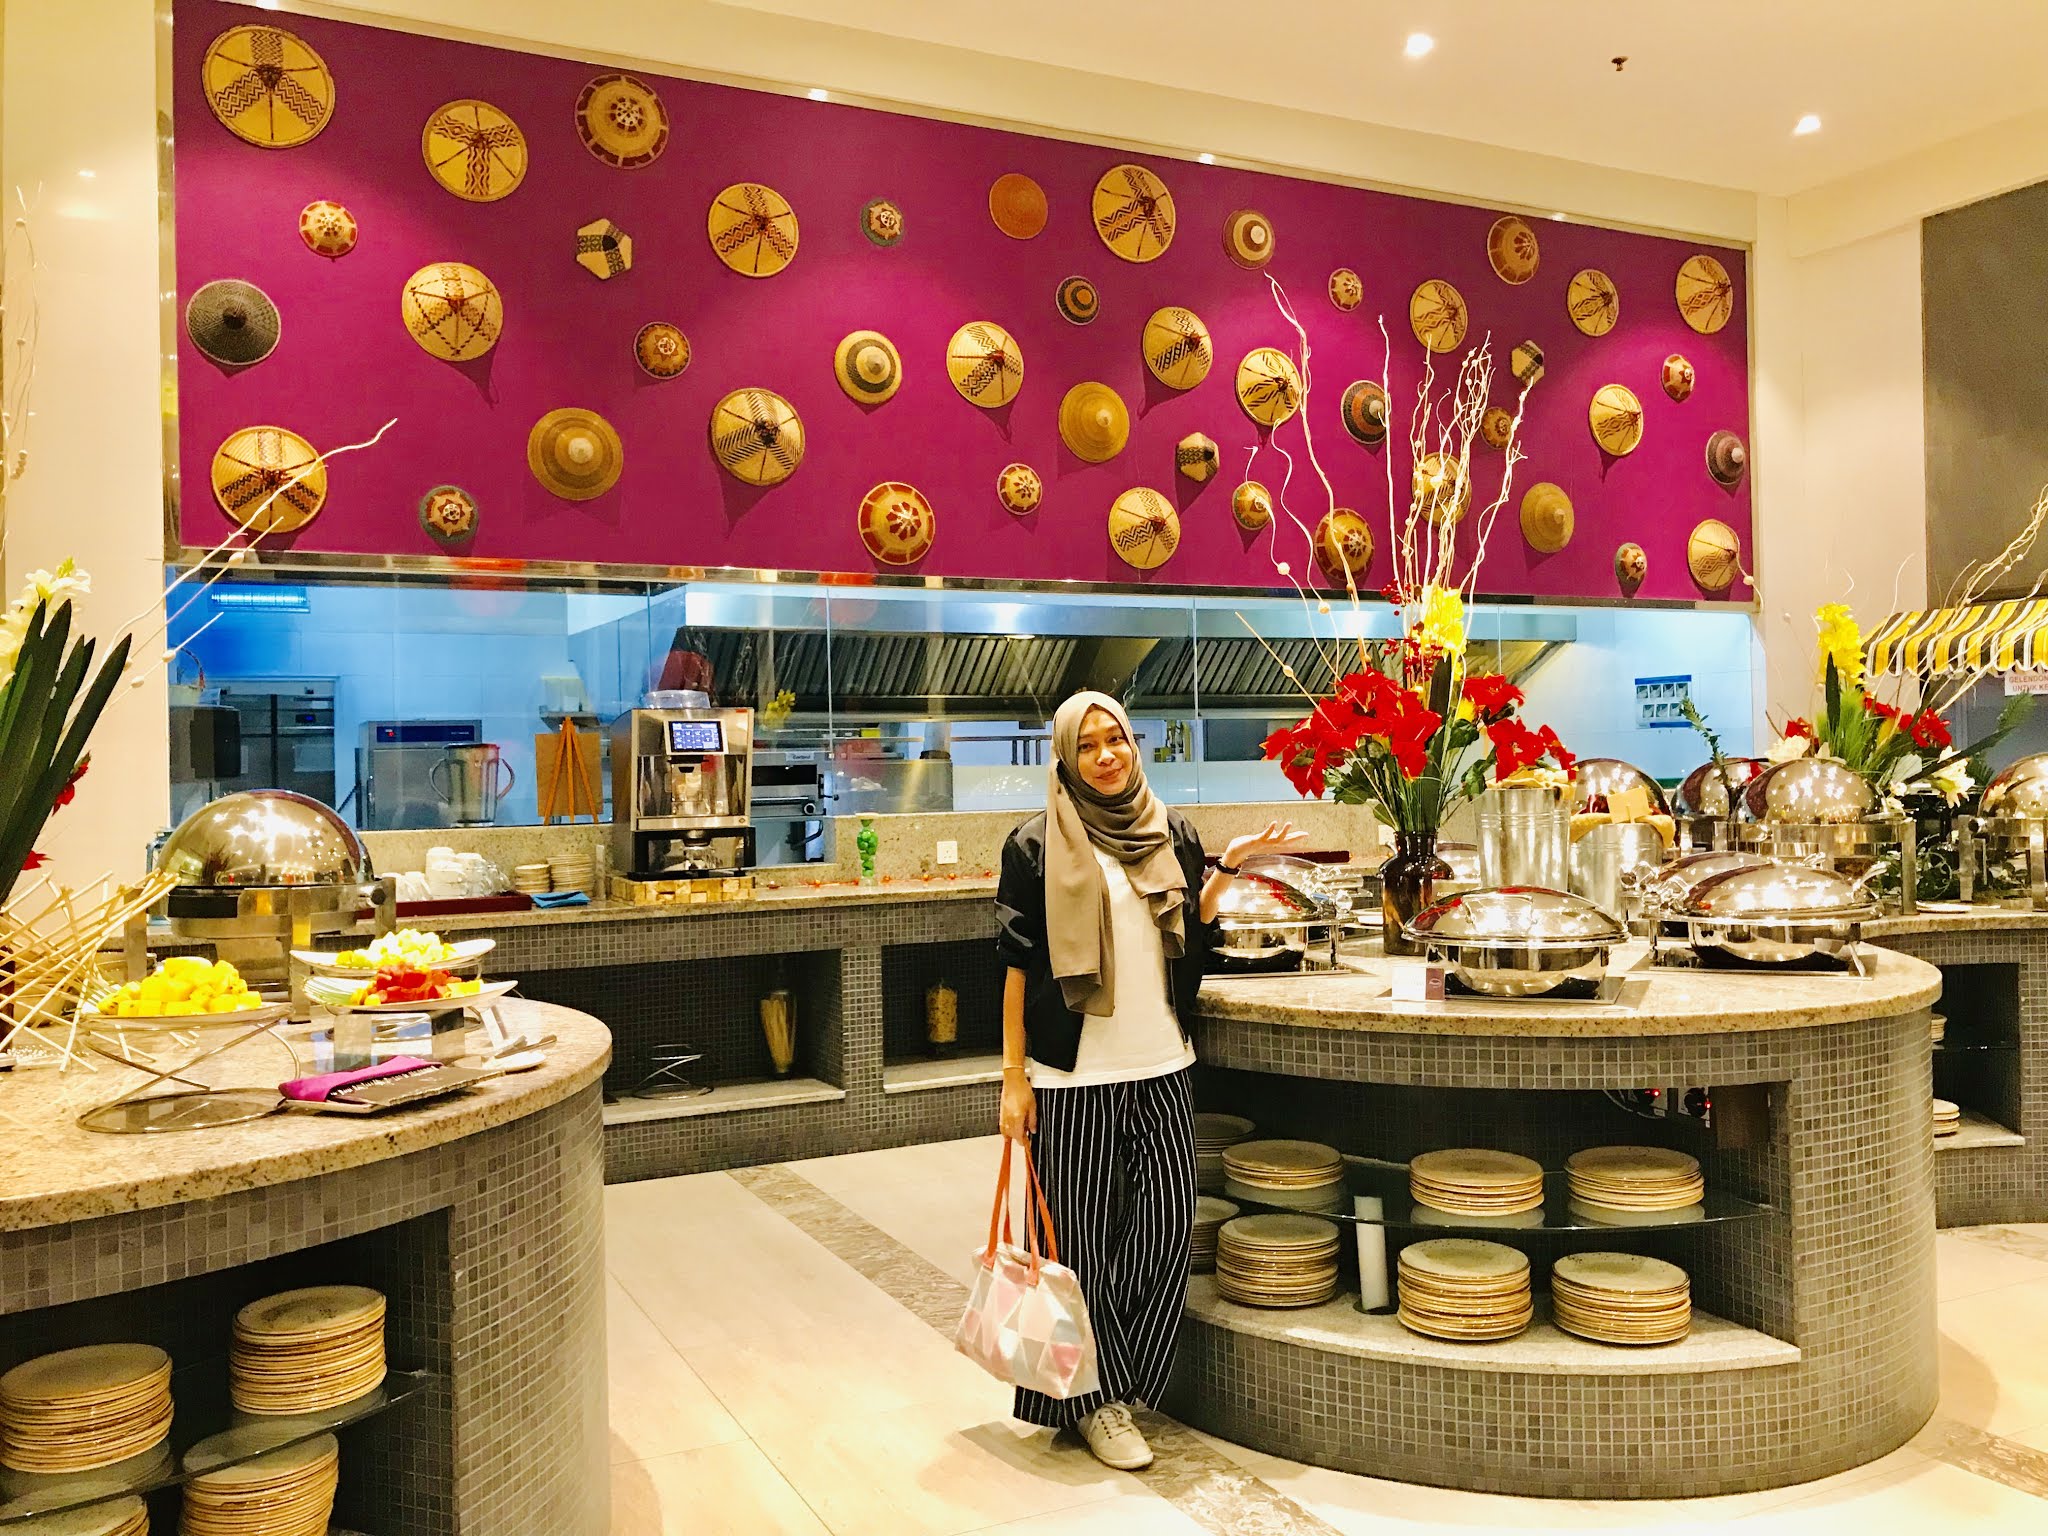 Buffet Dinner at Restoran Mercato, Avangio Hotel Kota Kinabalu, Sabah